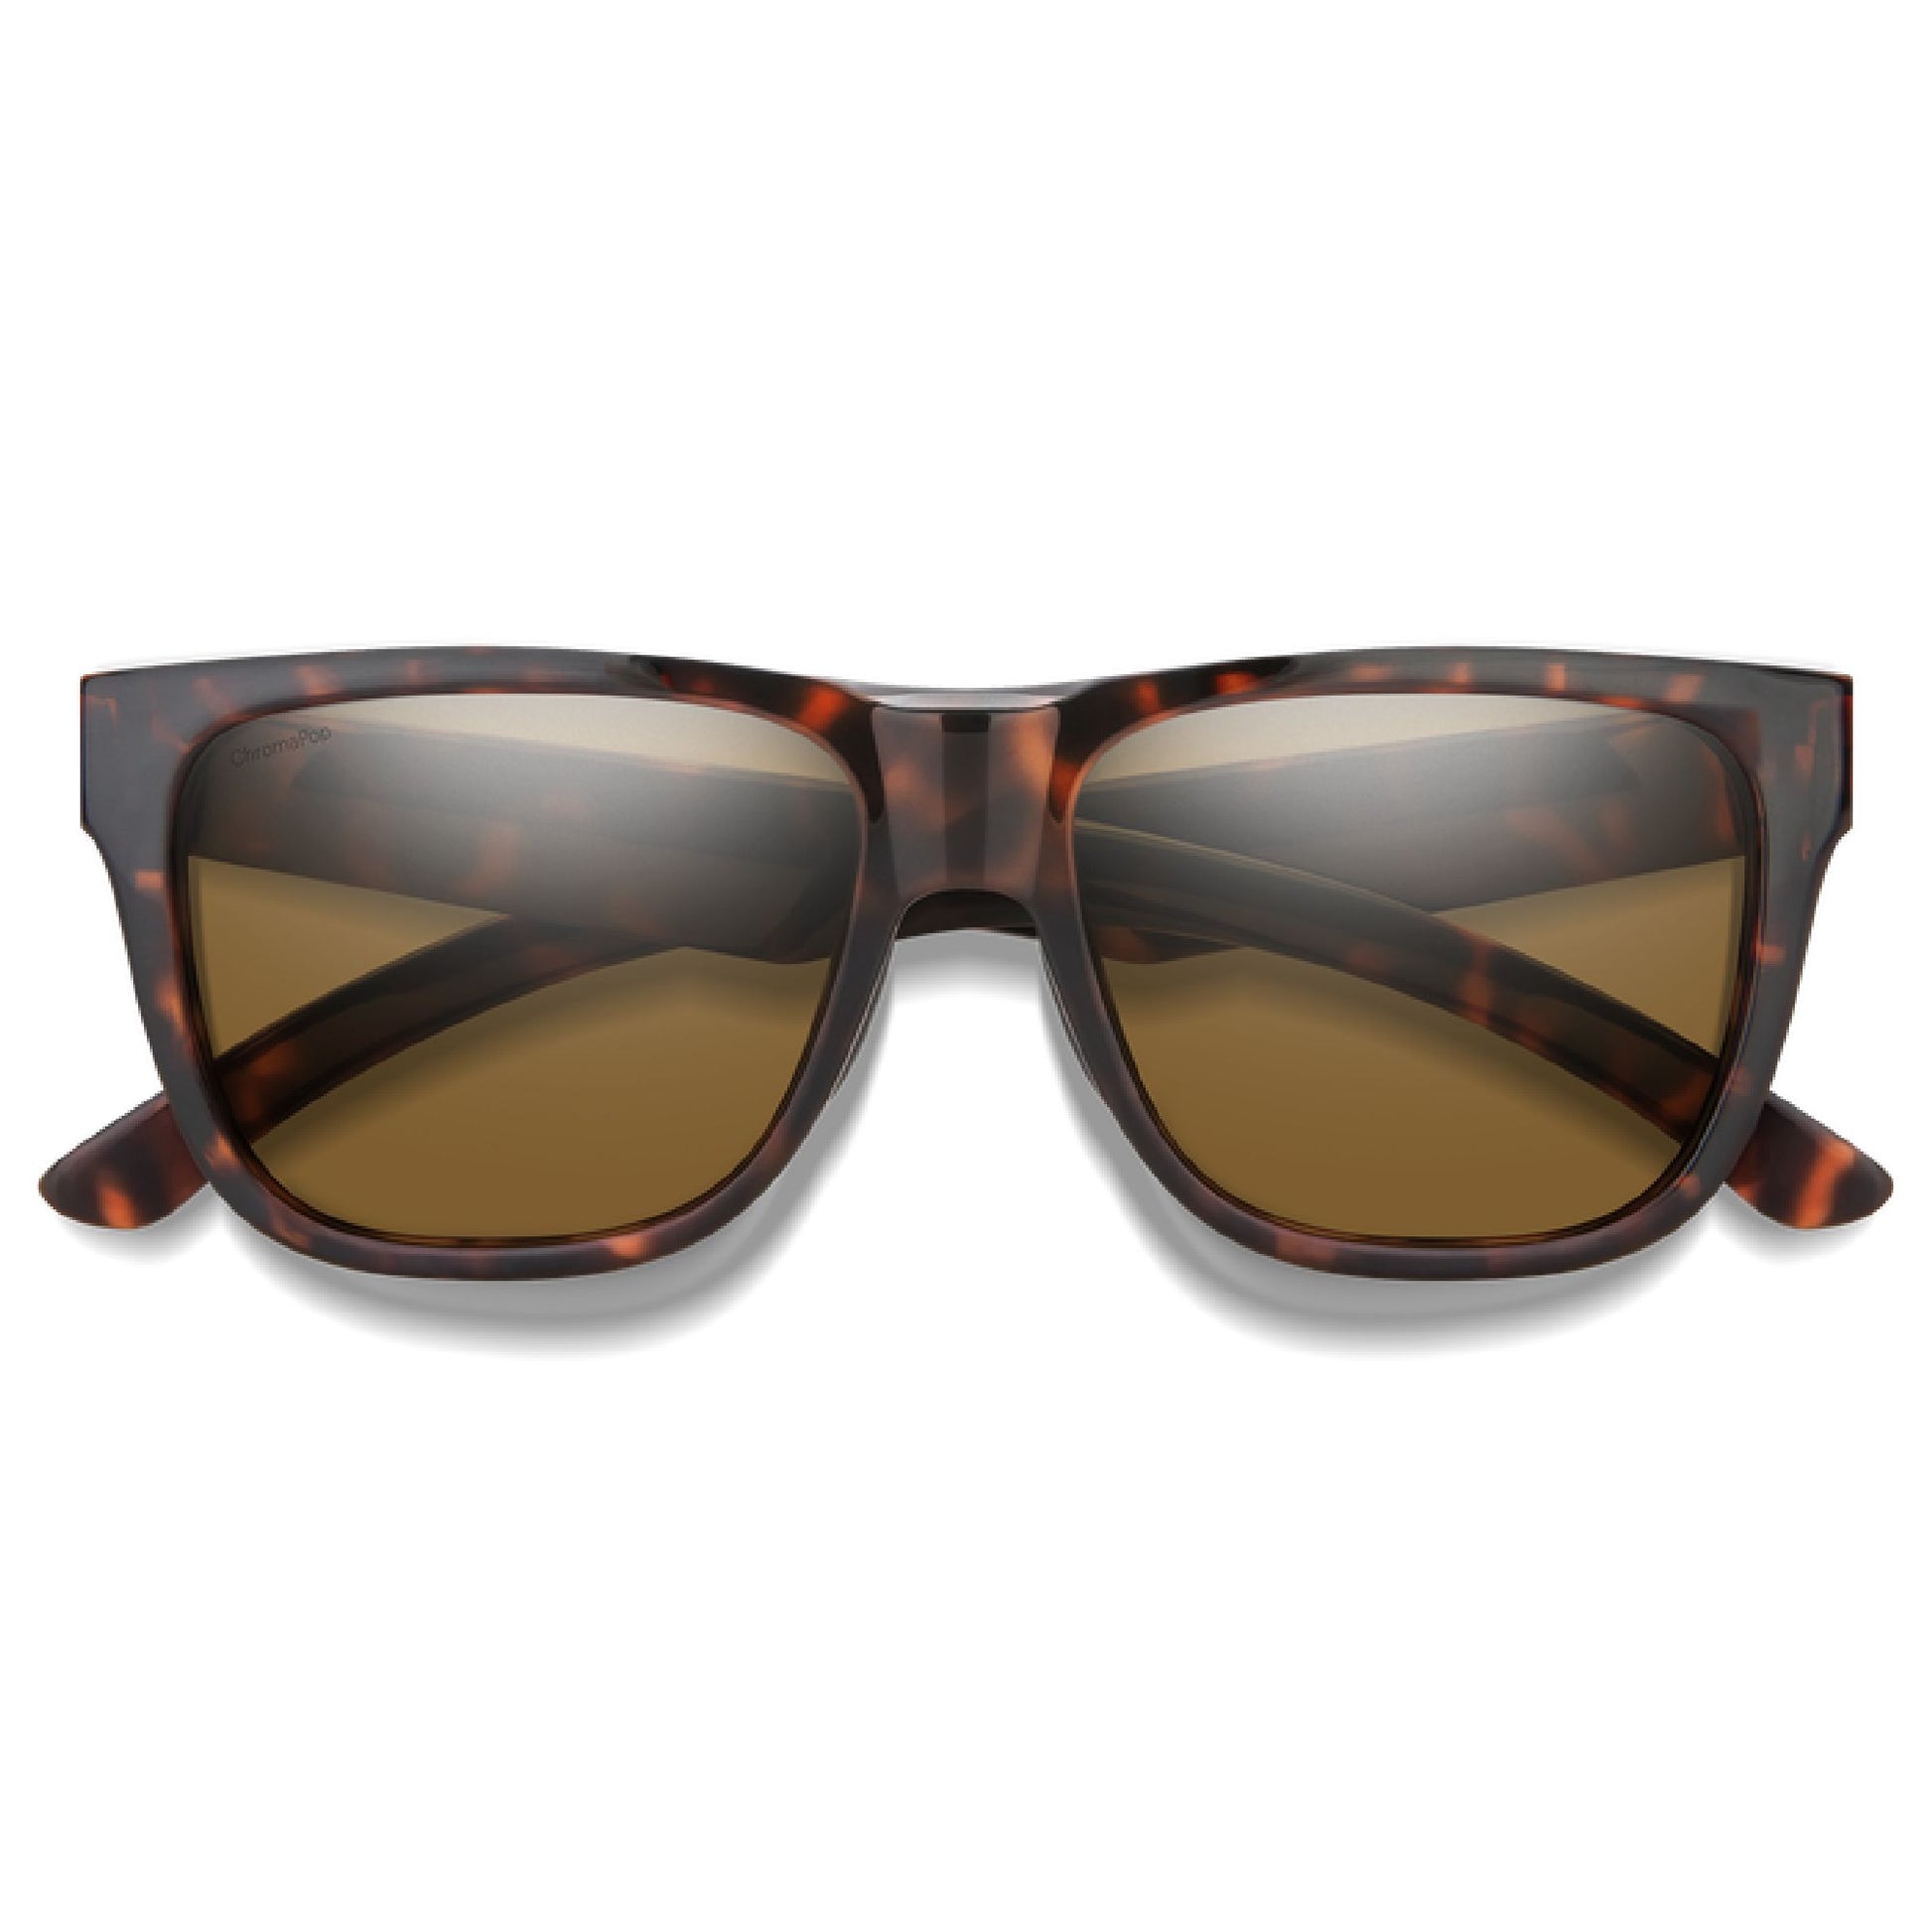 Smith Lowdown 2 Sunglasses Tortoise / ChromaPop Glass Polarized Brown Lens Sunglasses